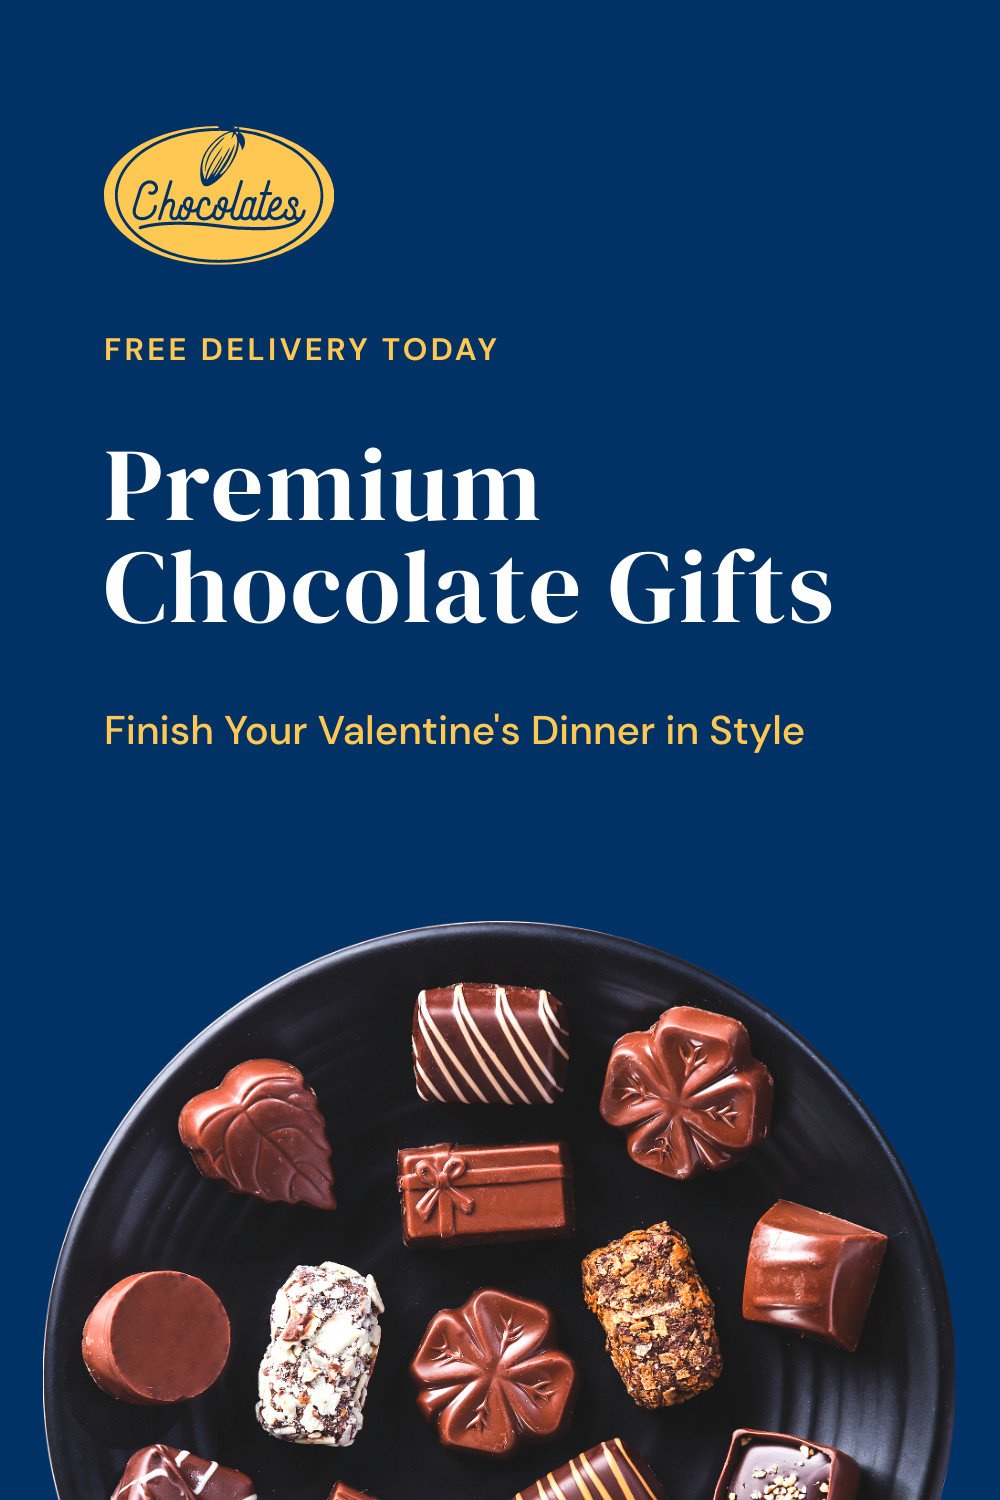 Premium Chocolate Valentine's Day Inline Rectangle 300x250